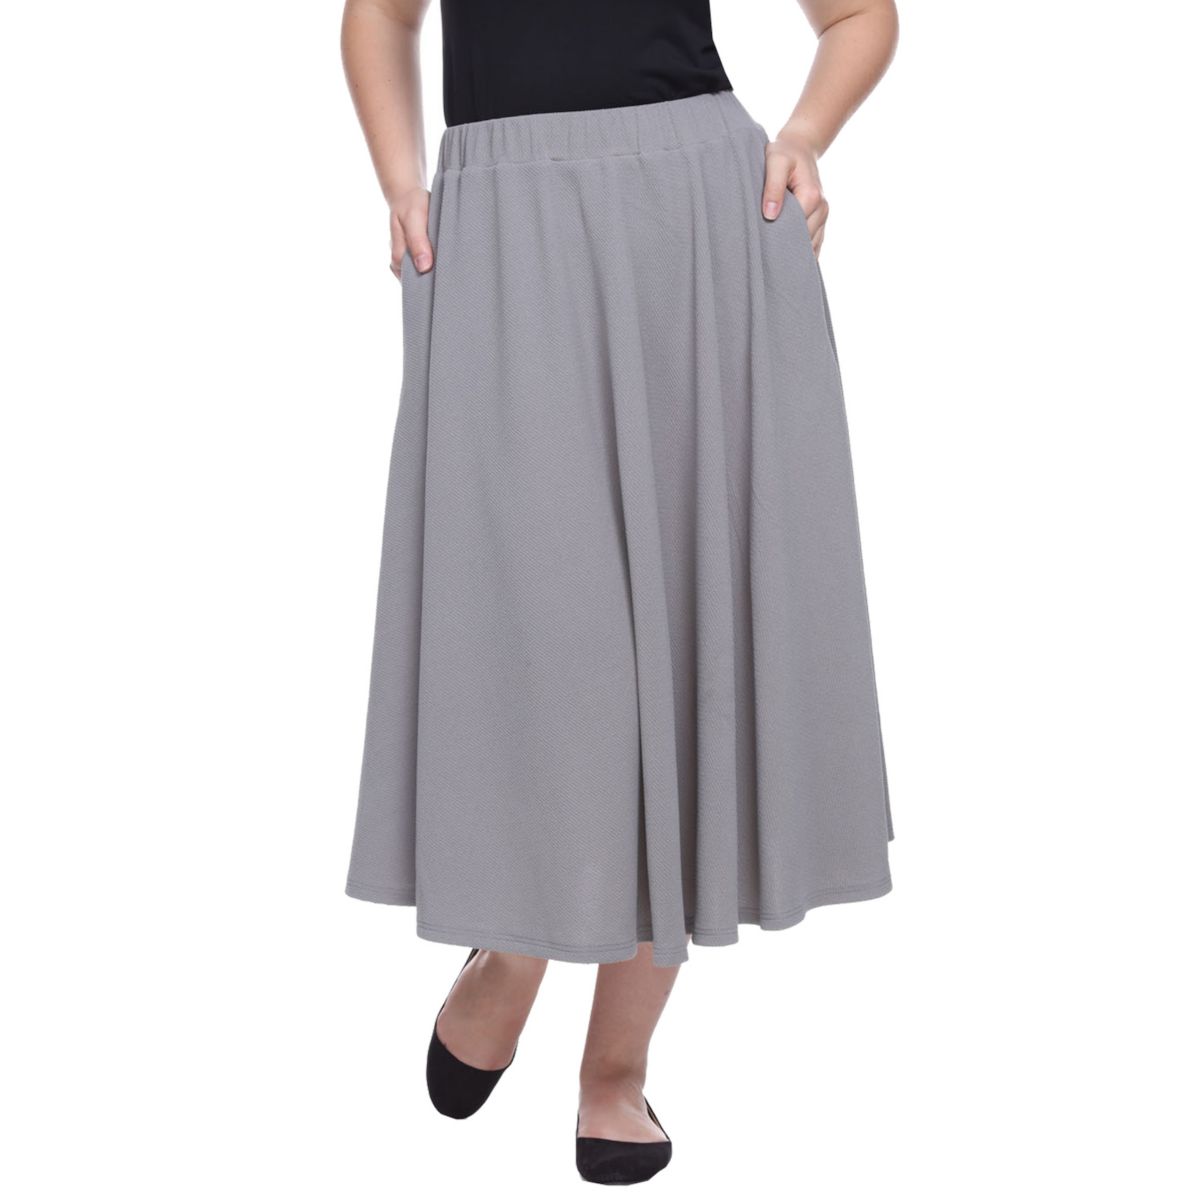 Plus Size Flared Midi Skirt WM Fashion